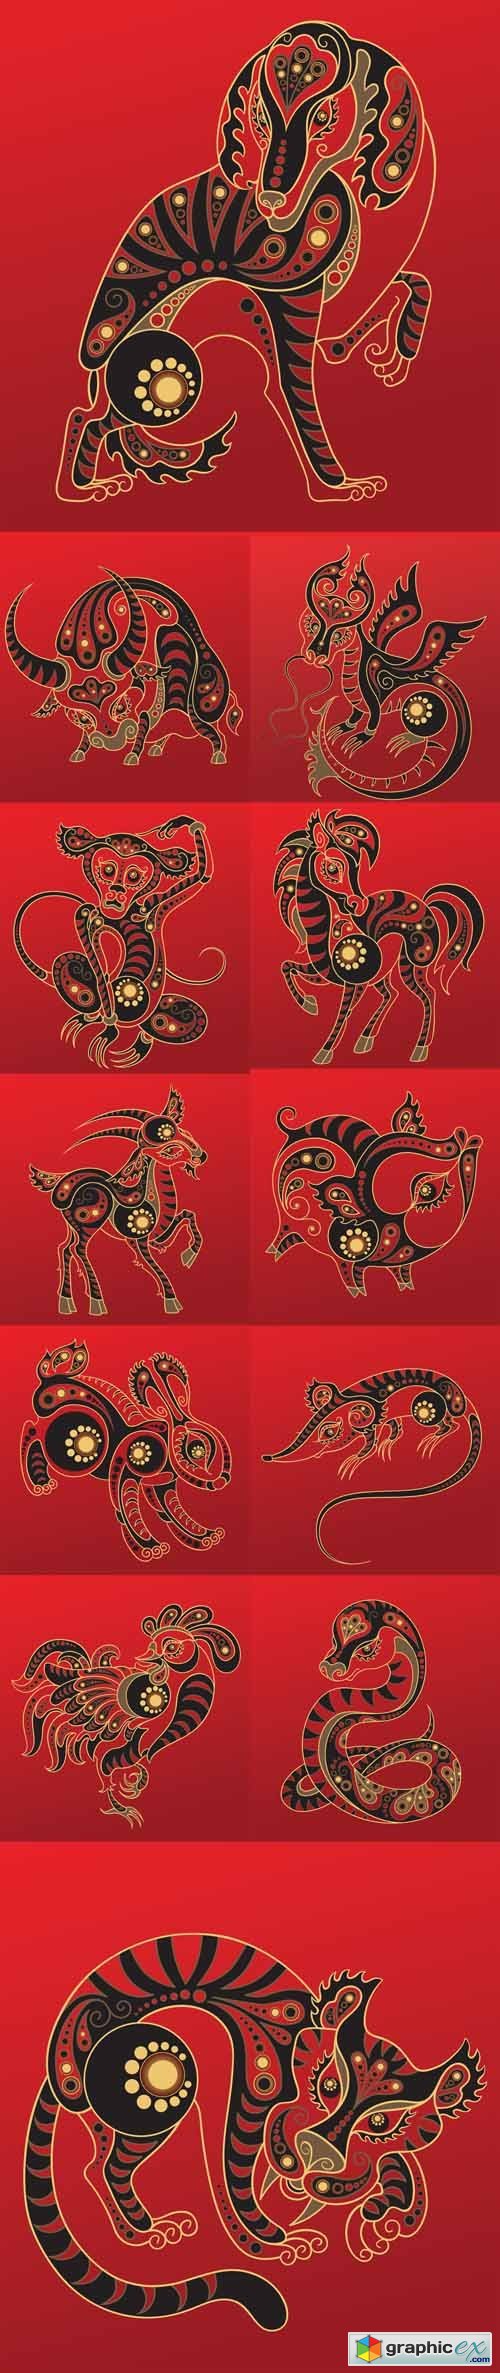 Chinese Horoscope Animal Signs